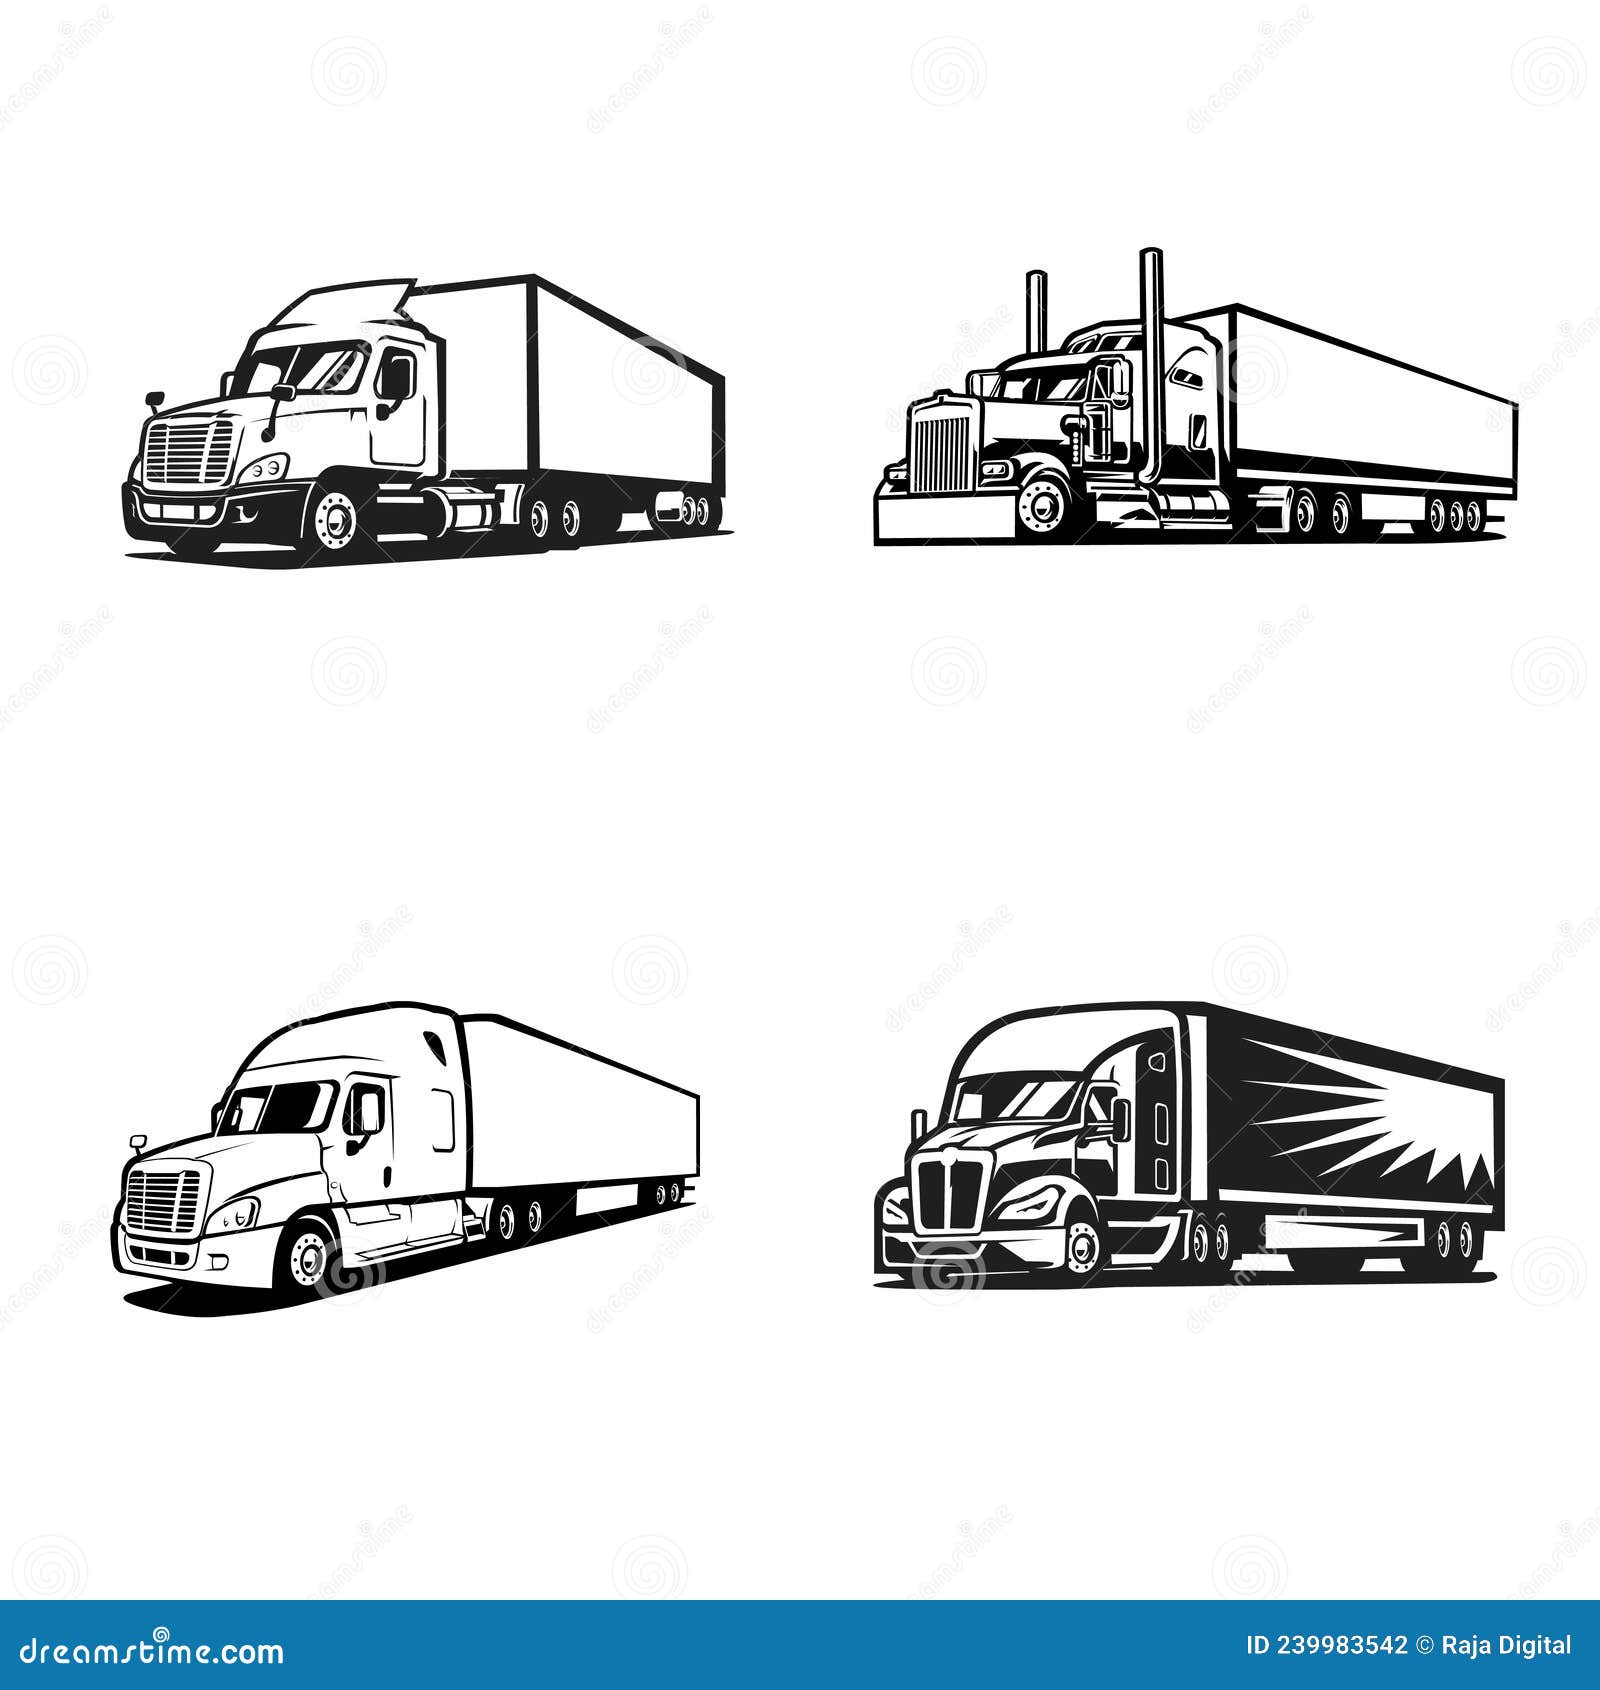 semi truck 18 wheeler truck   bundle set in white background